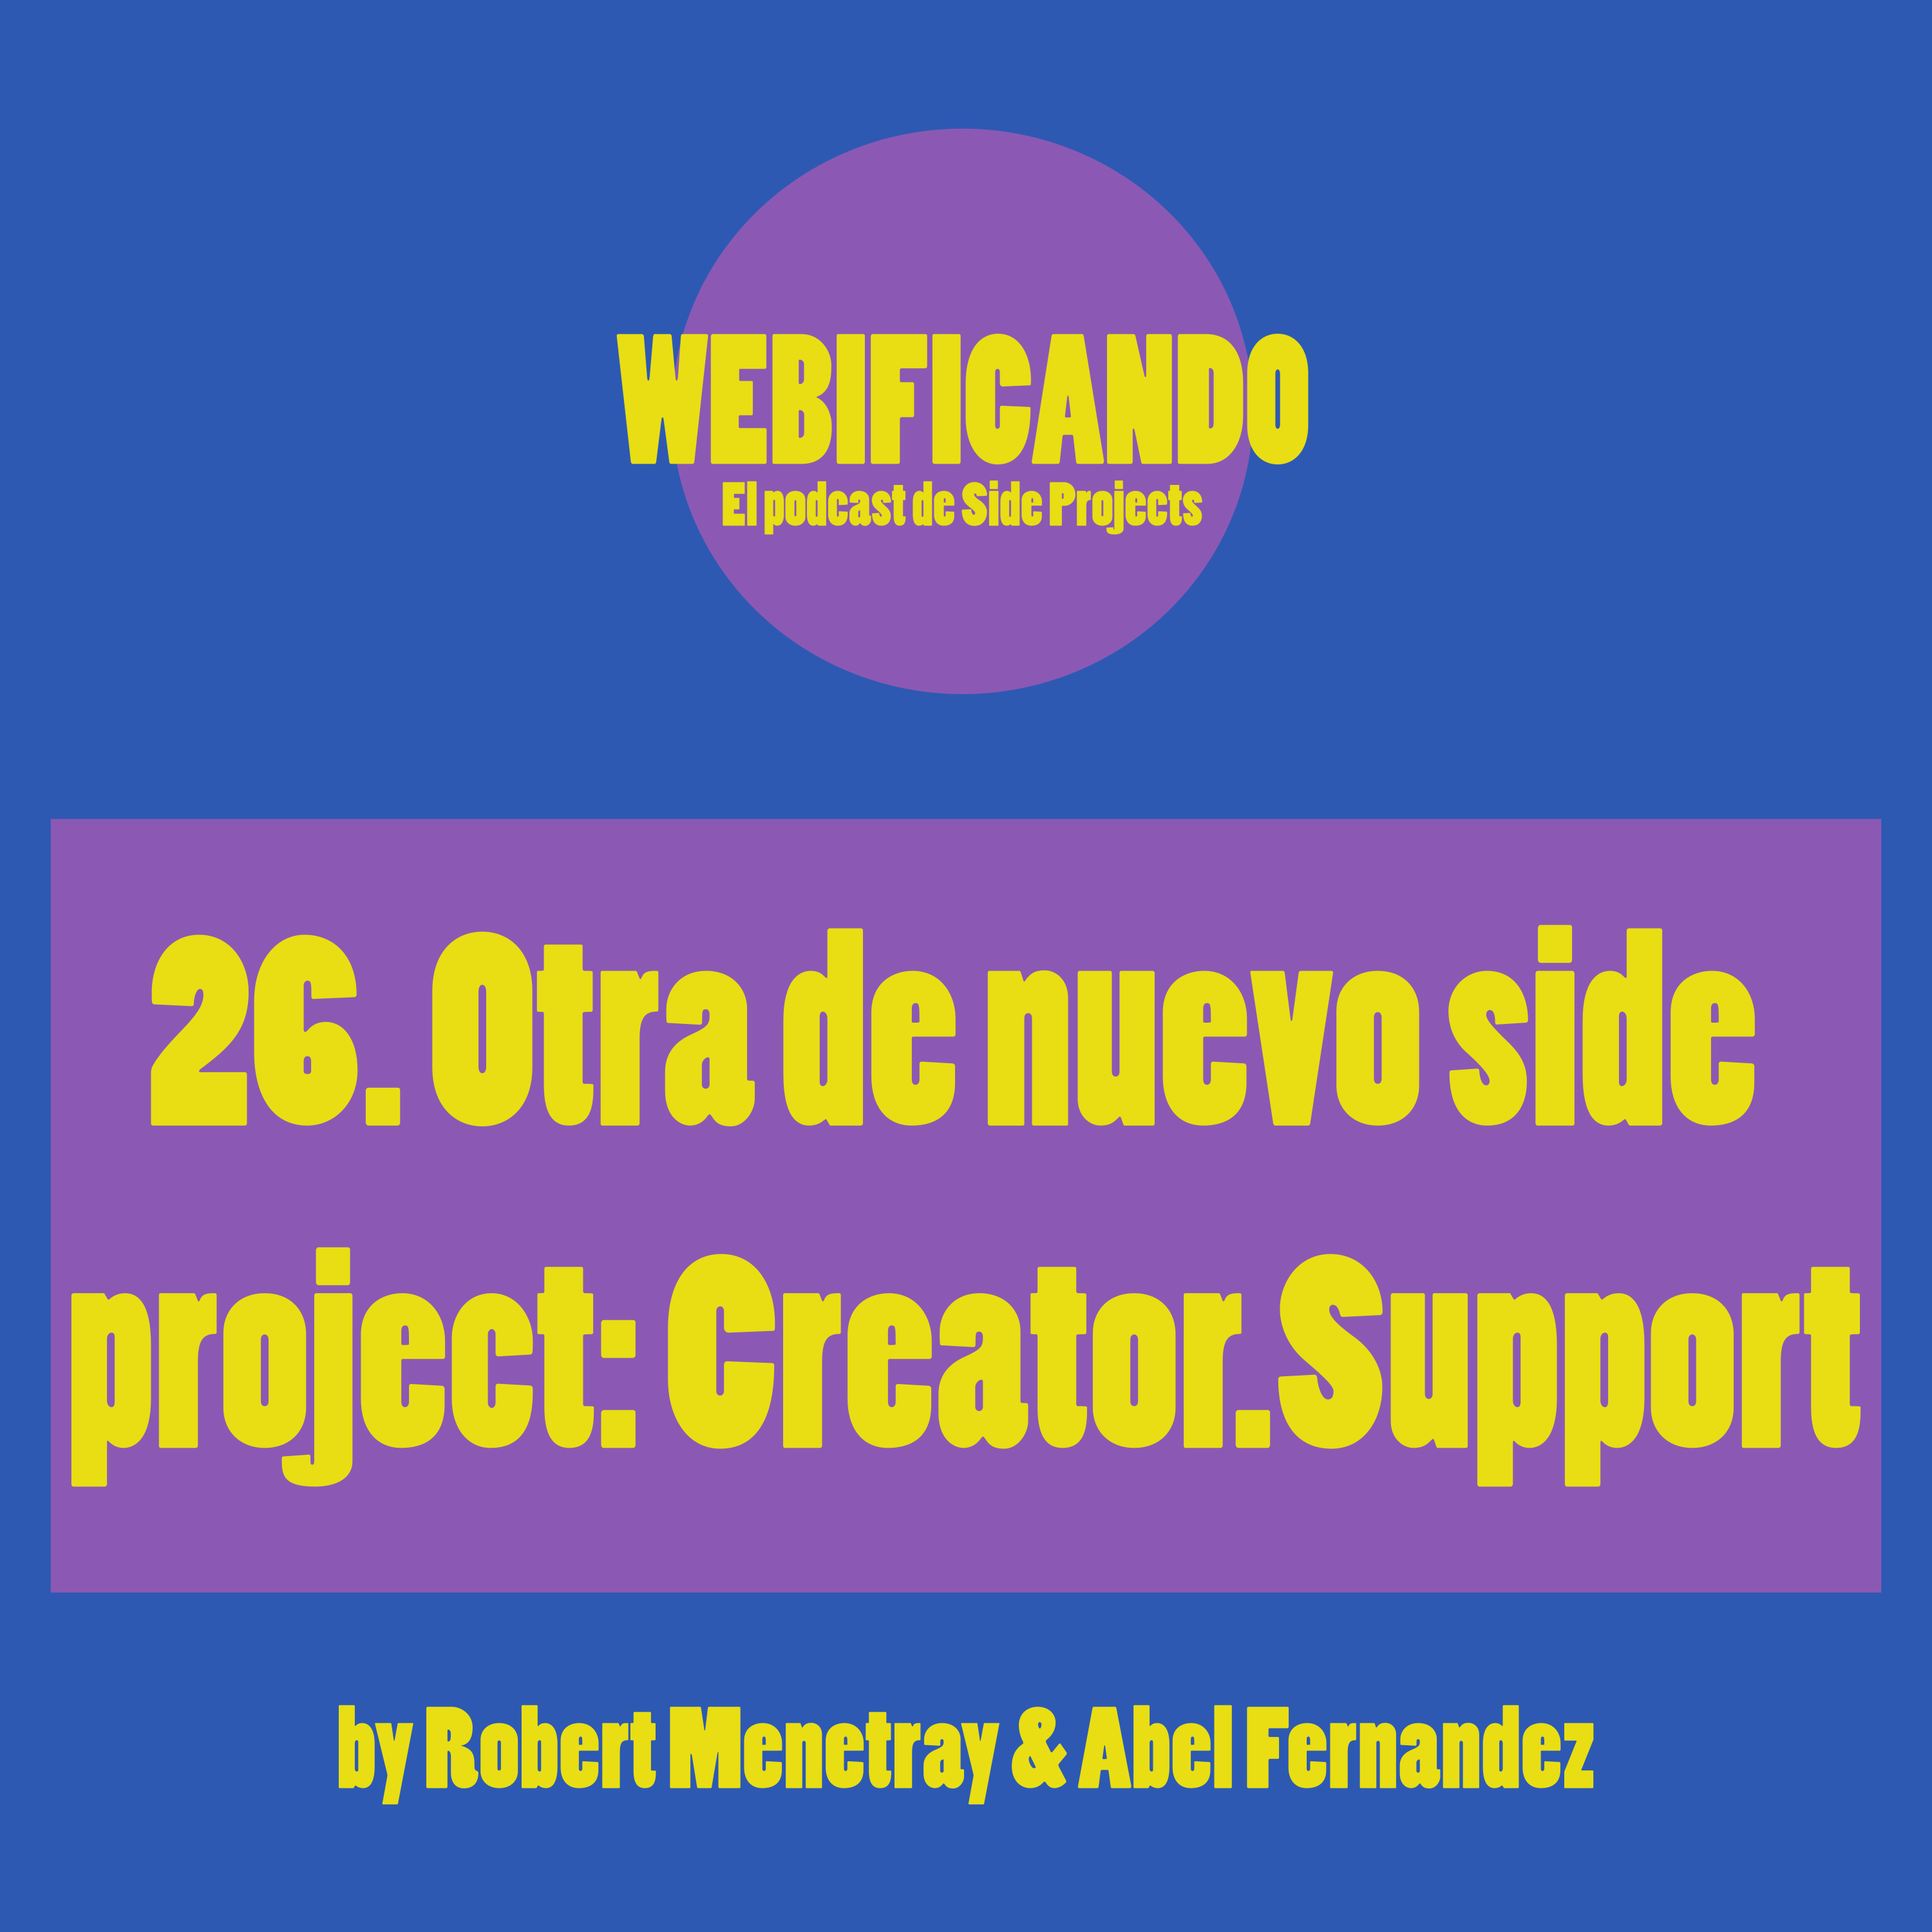 26. Otra de nuevo side project: Creator.Support